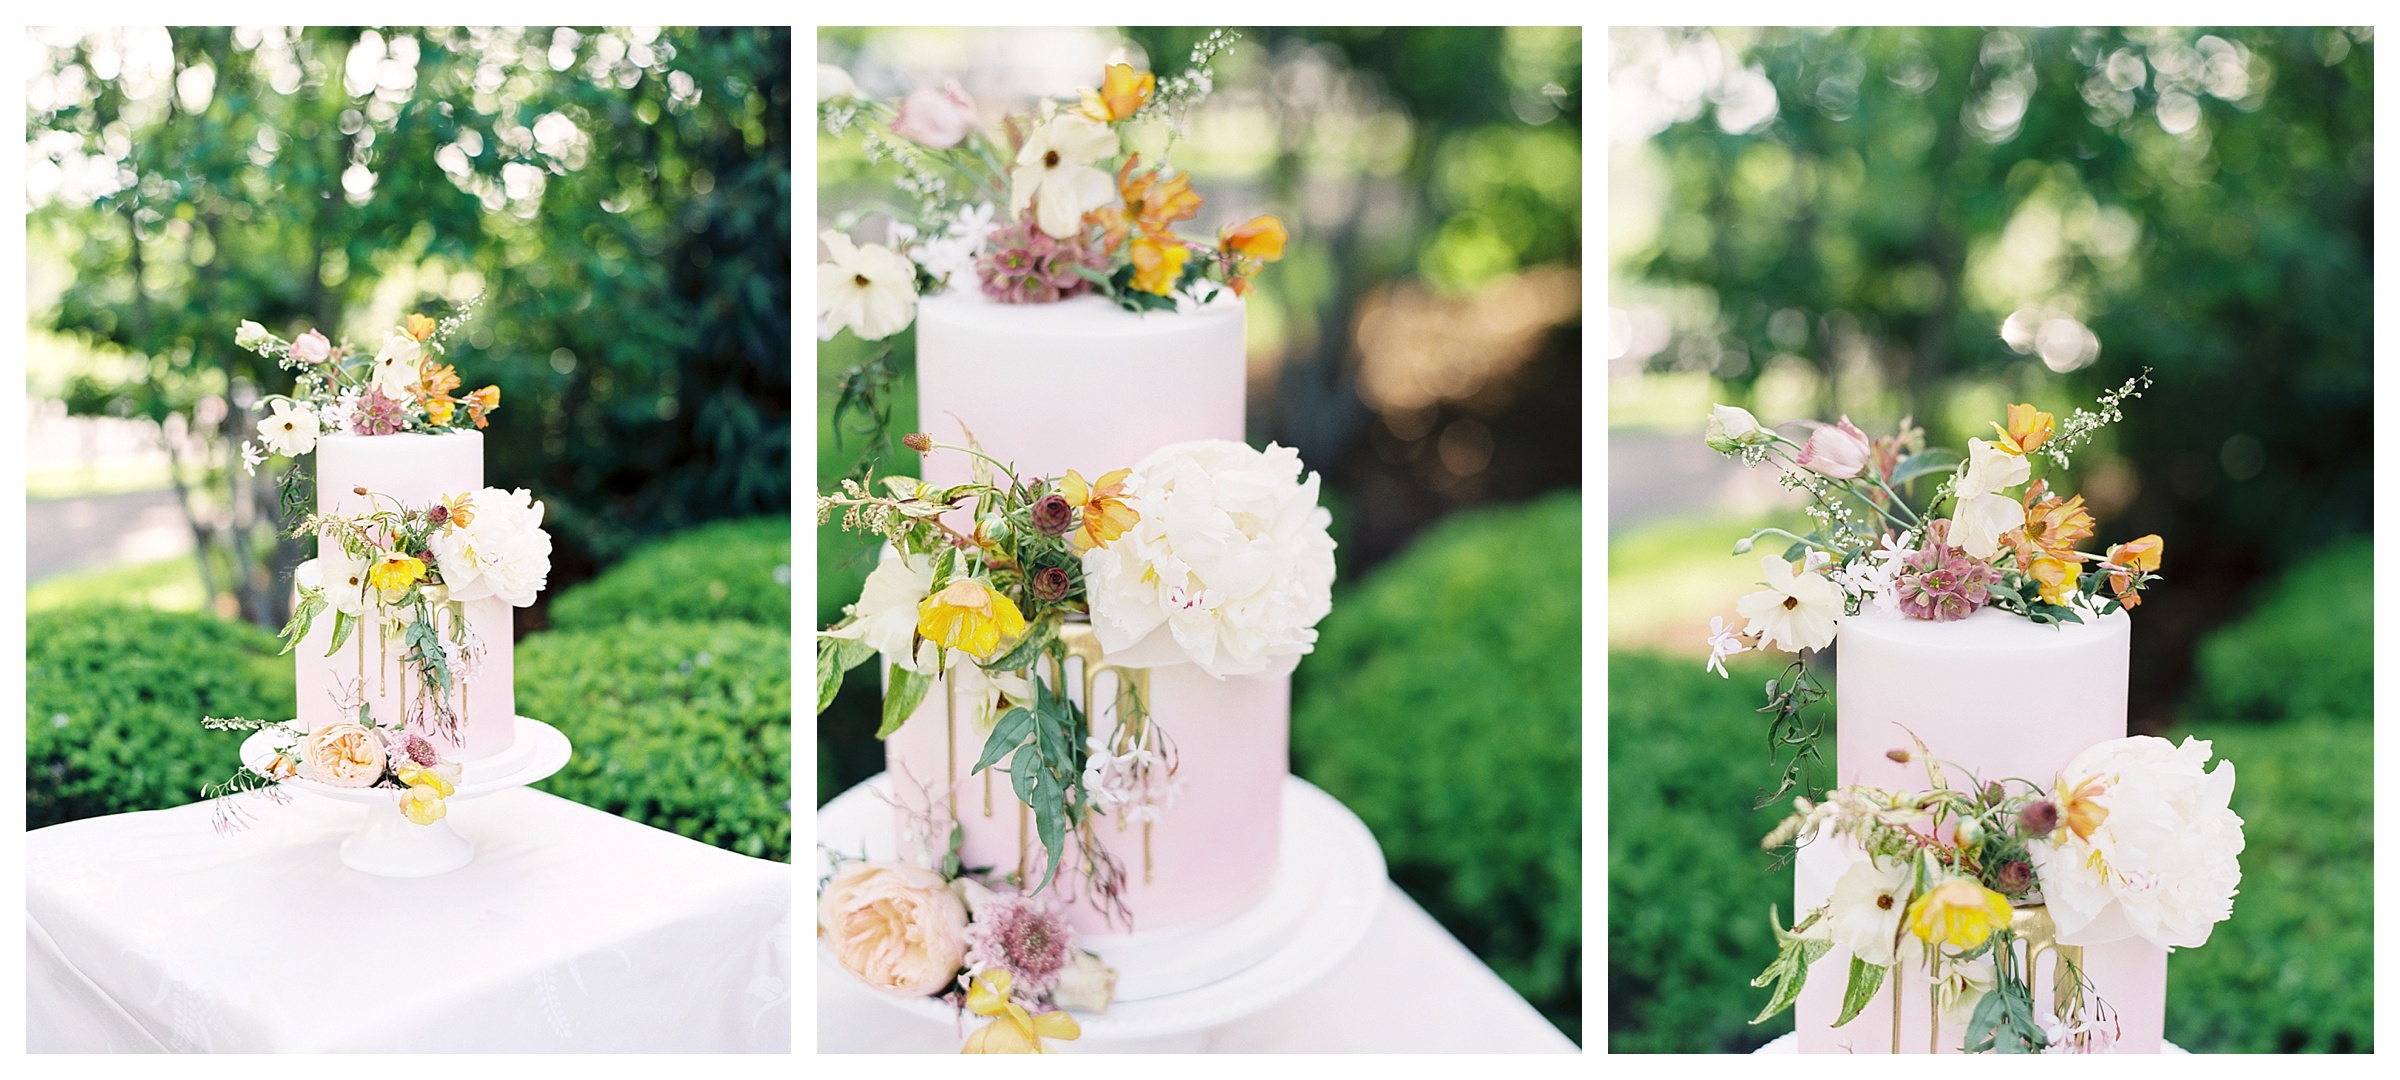 Fine art floral wedding cake